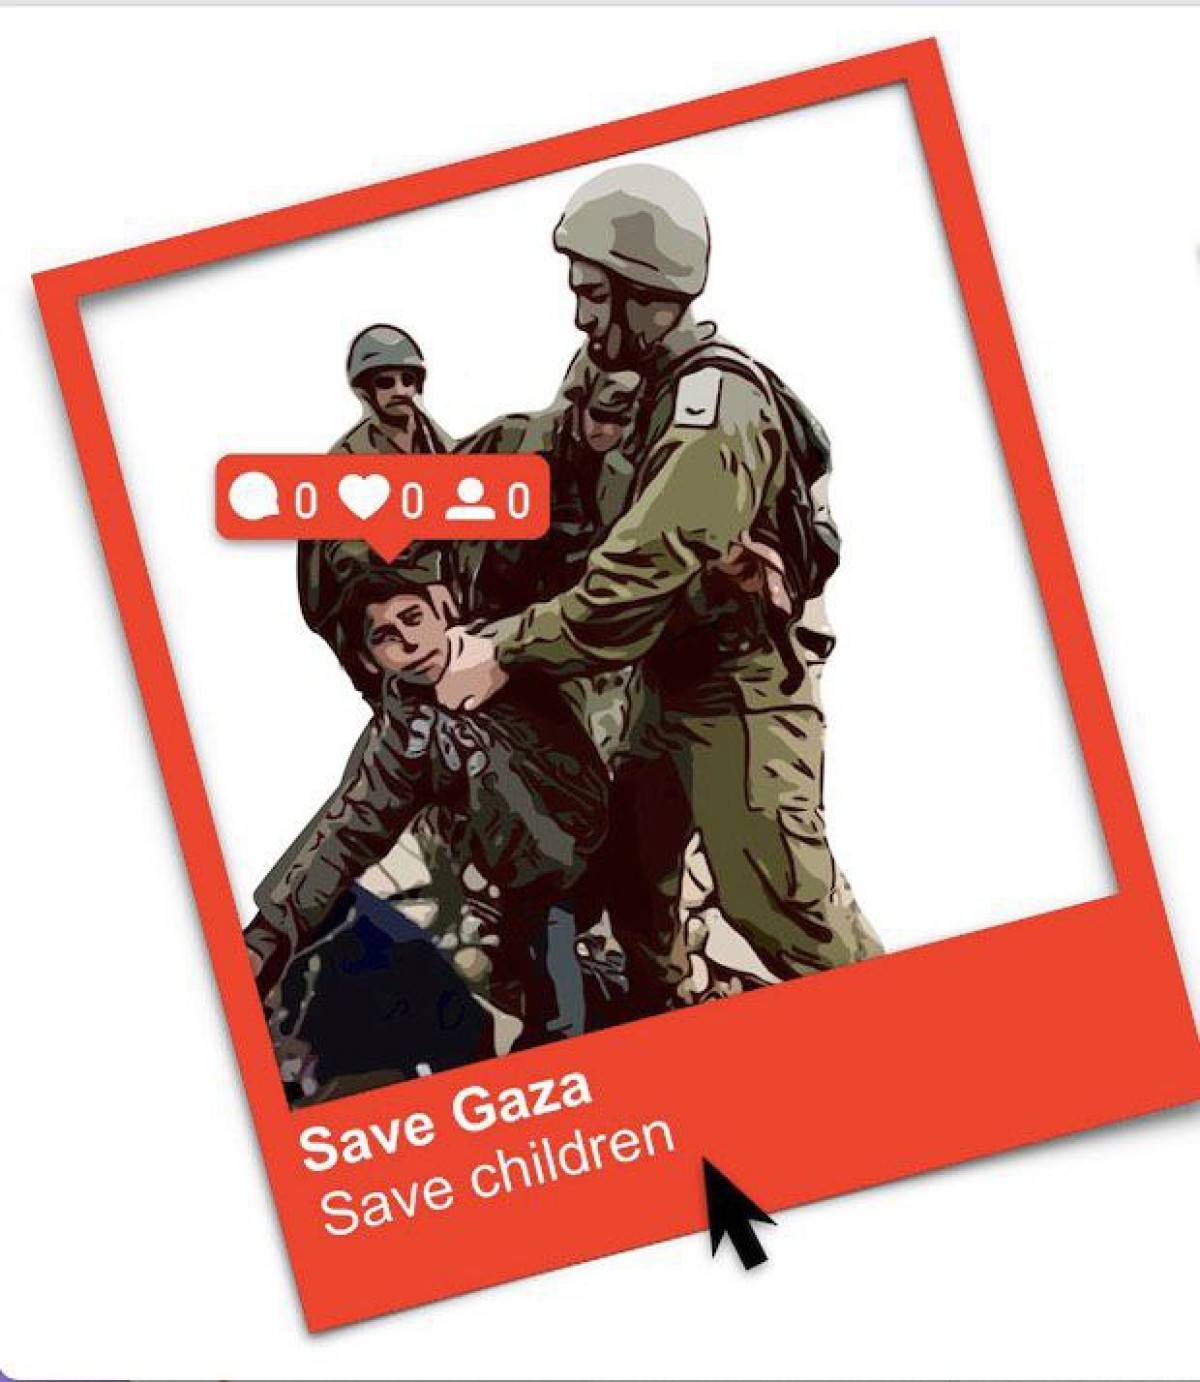 Save Gaza Save children